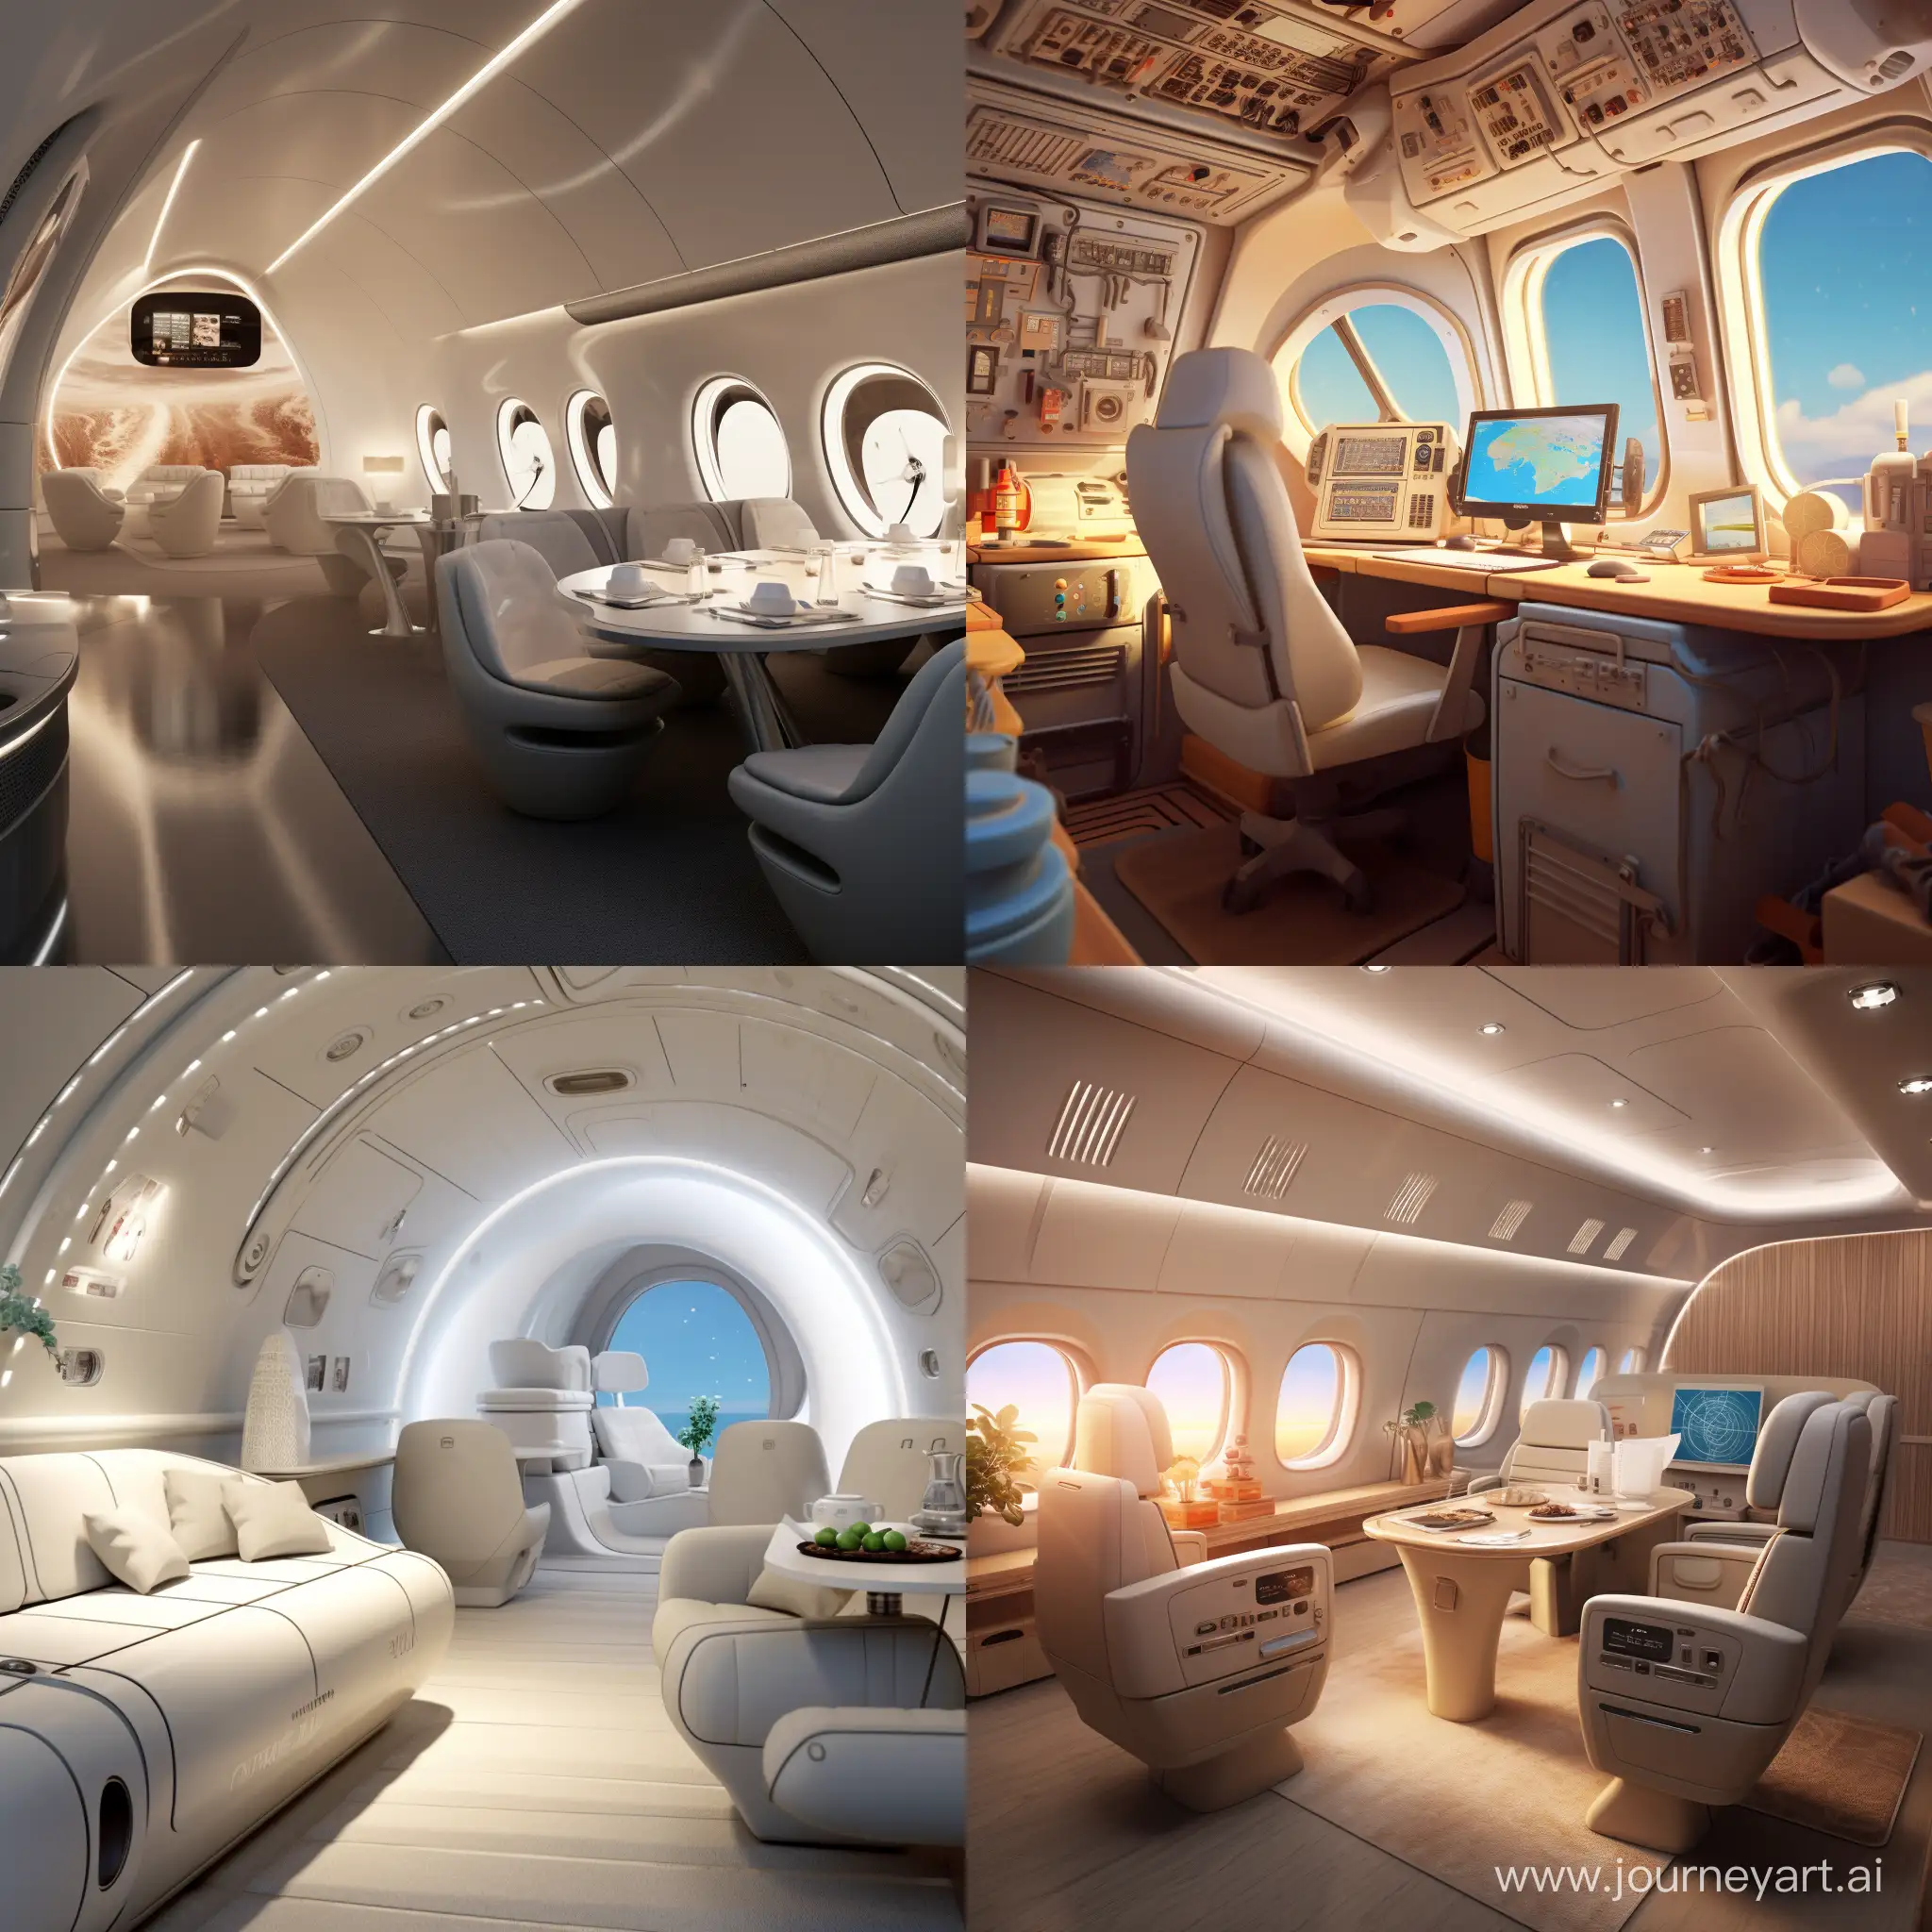 Spacious-Airbus-Cabin-Interior-with-Seating-Arrangement-AR-11-Image-5981